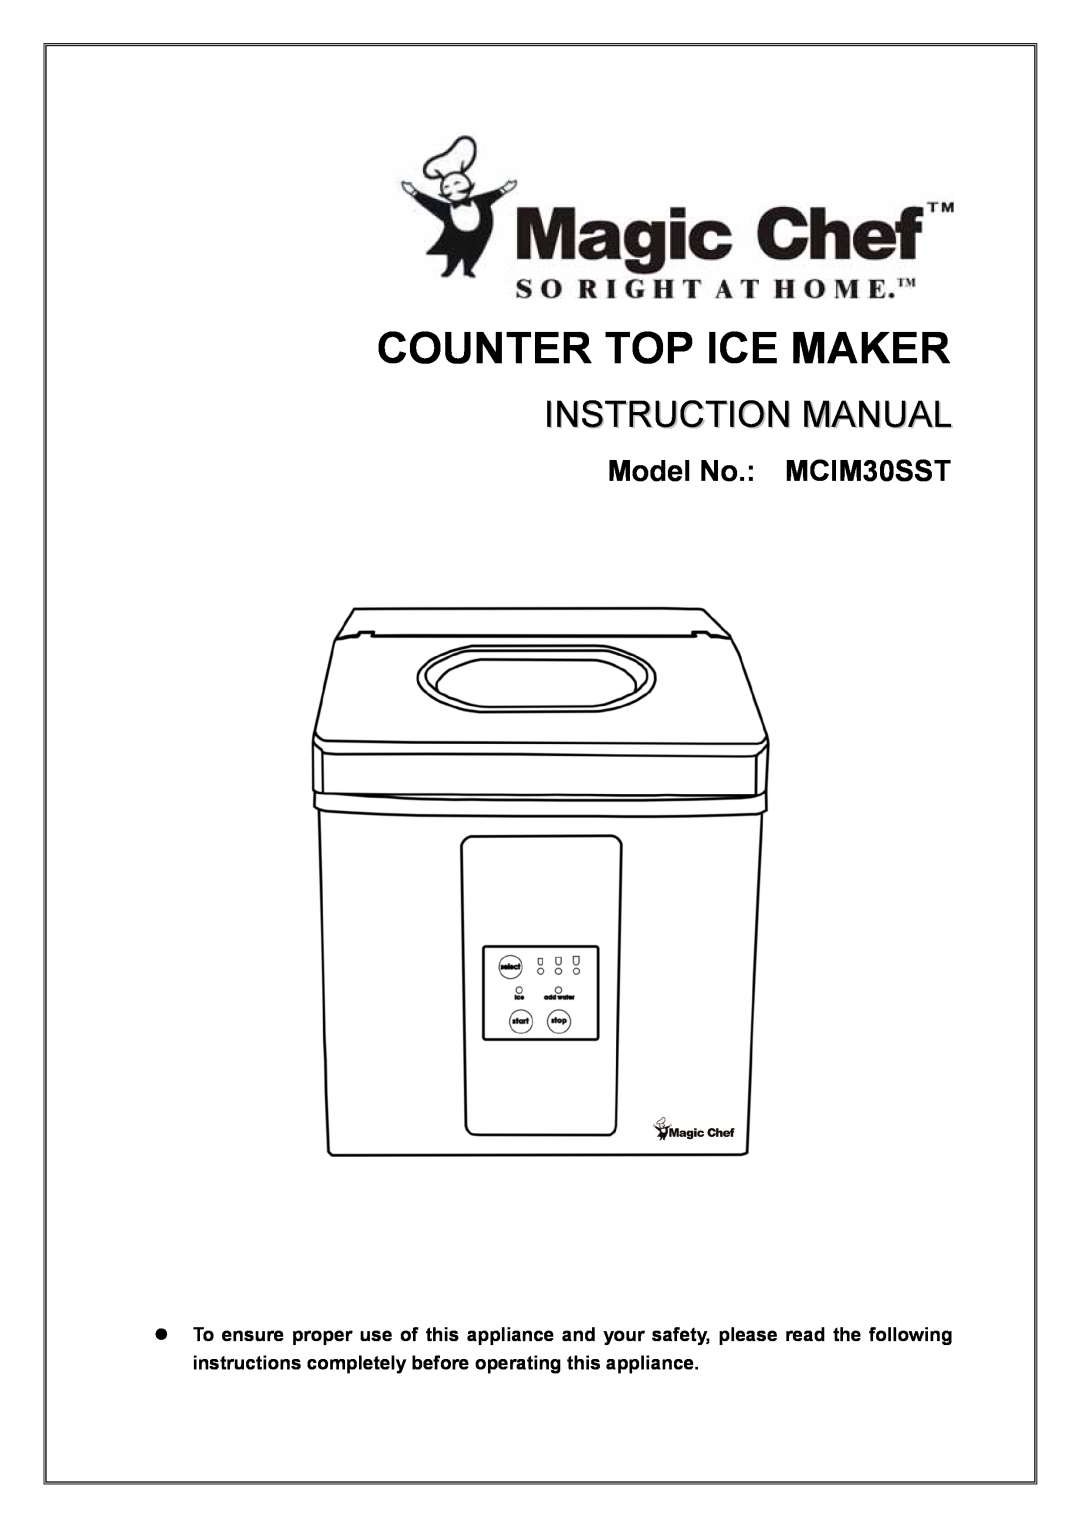 Magic Chef manual Counter Top Ice Maker, Instruction Manual, Model No. MCIM30SST 